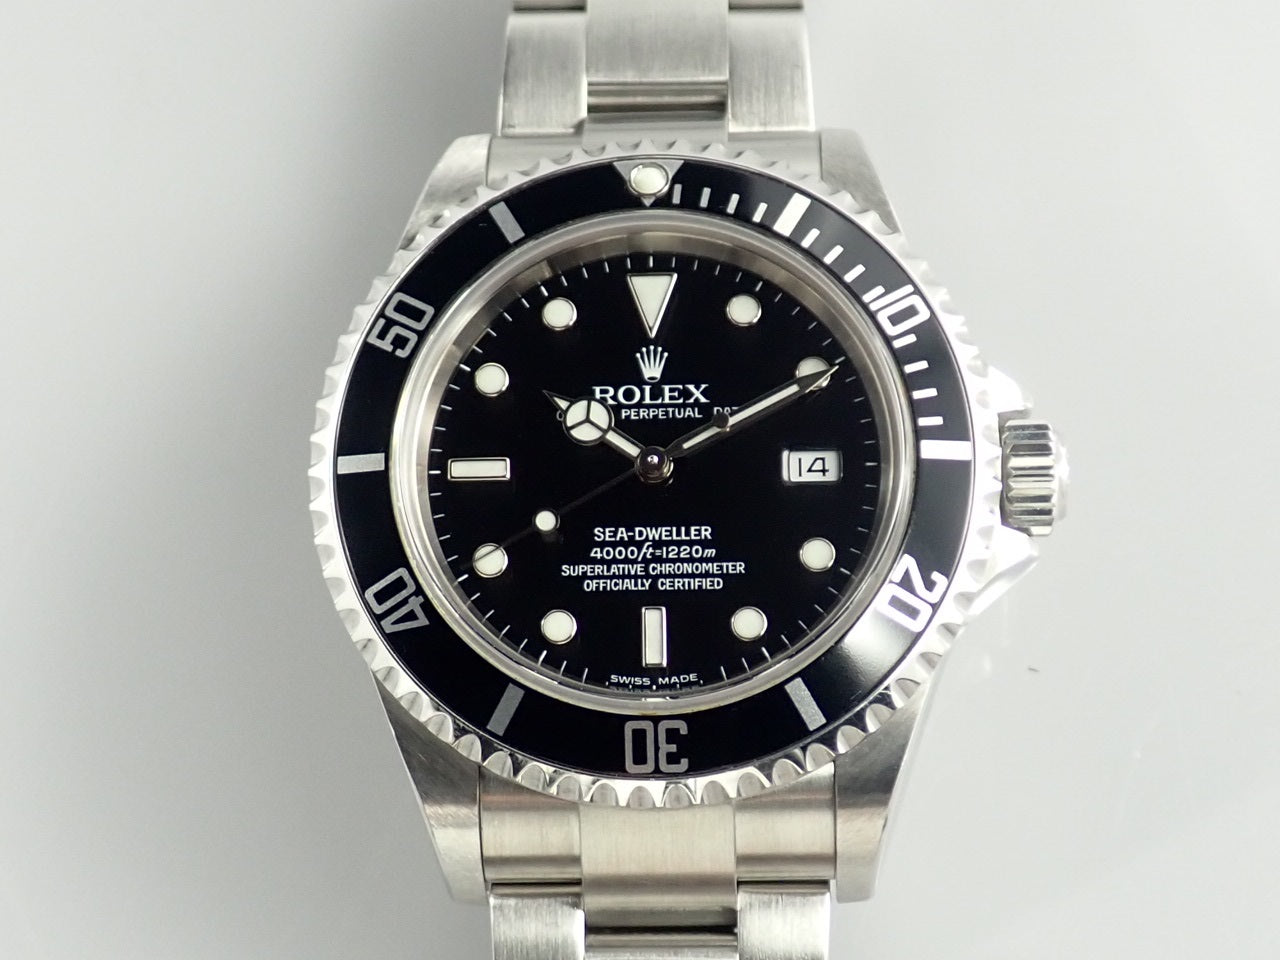 Rolex Sea-Dweller D serial number &lt;Warranty, box, etc.&gt;